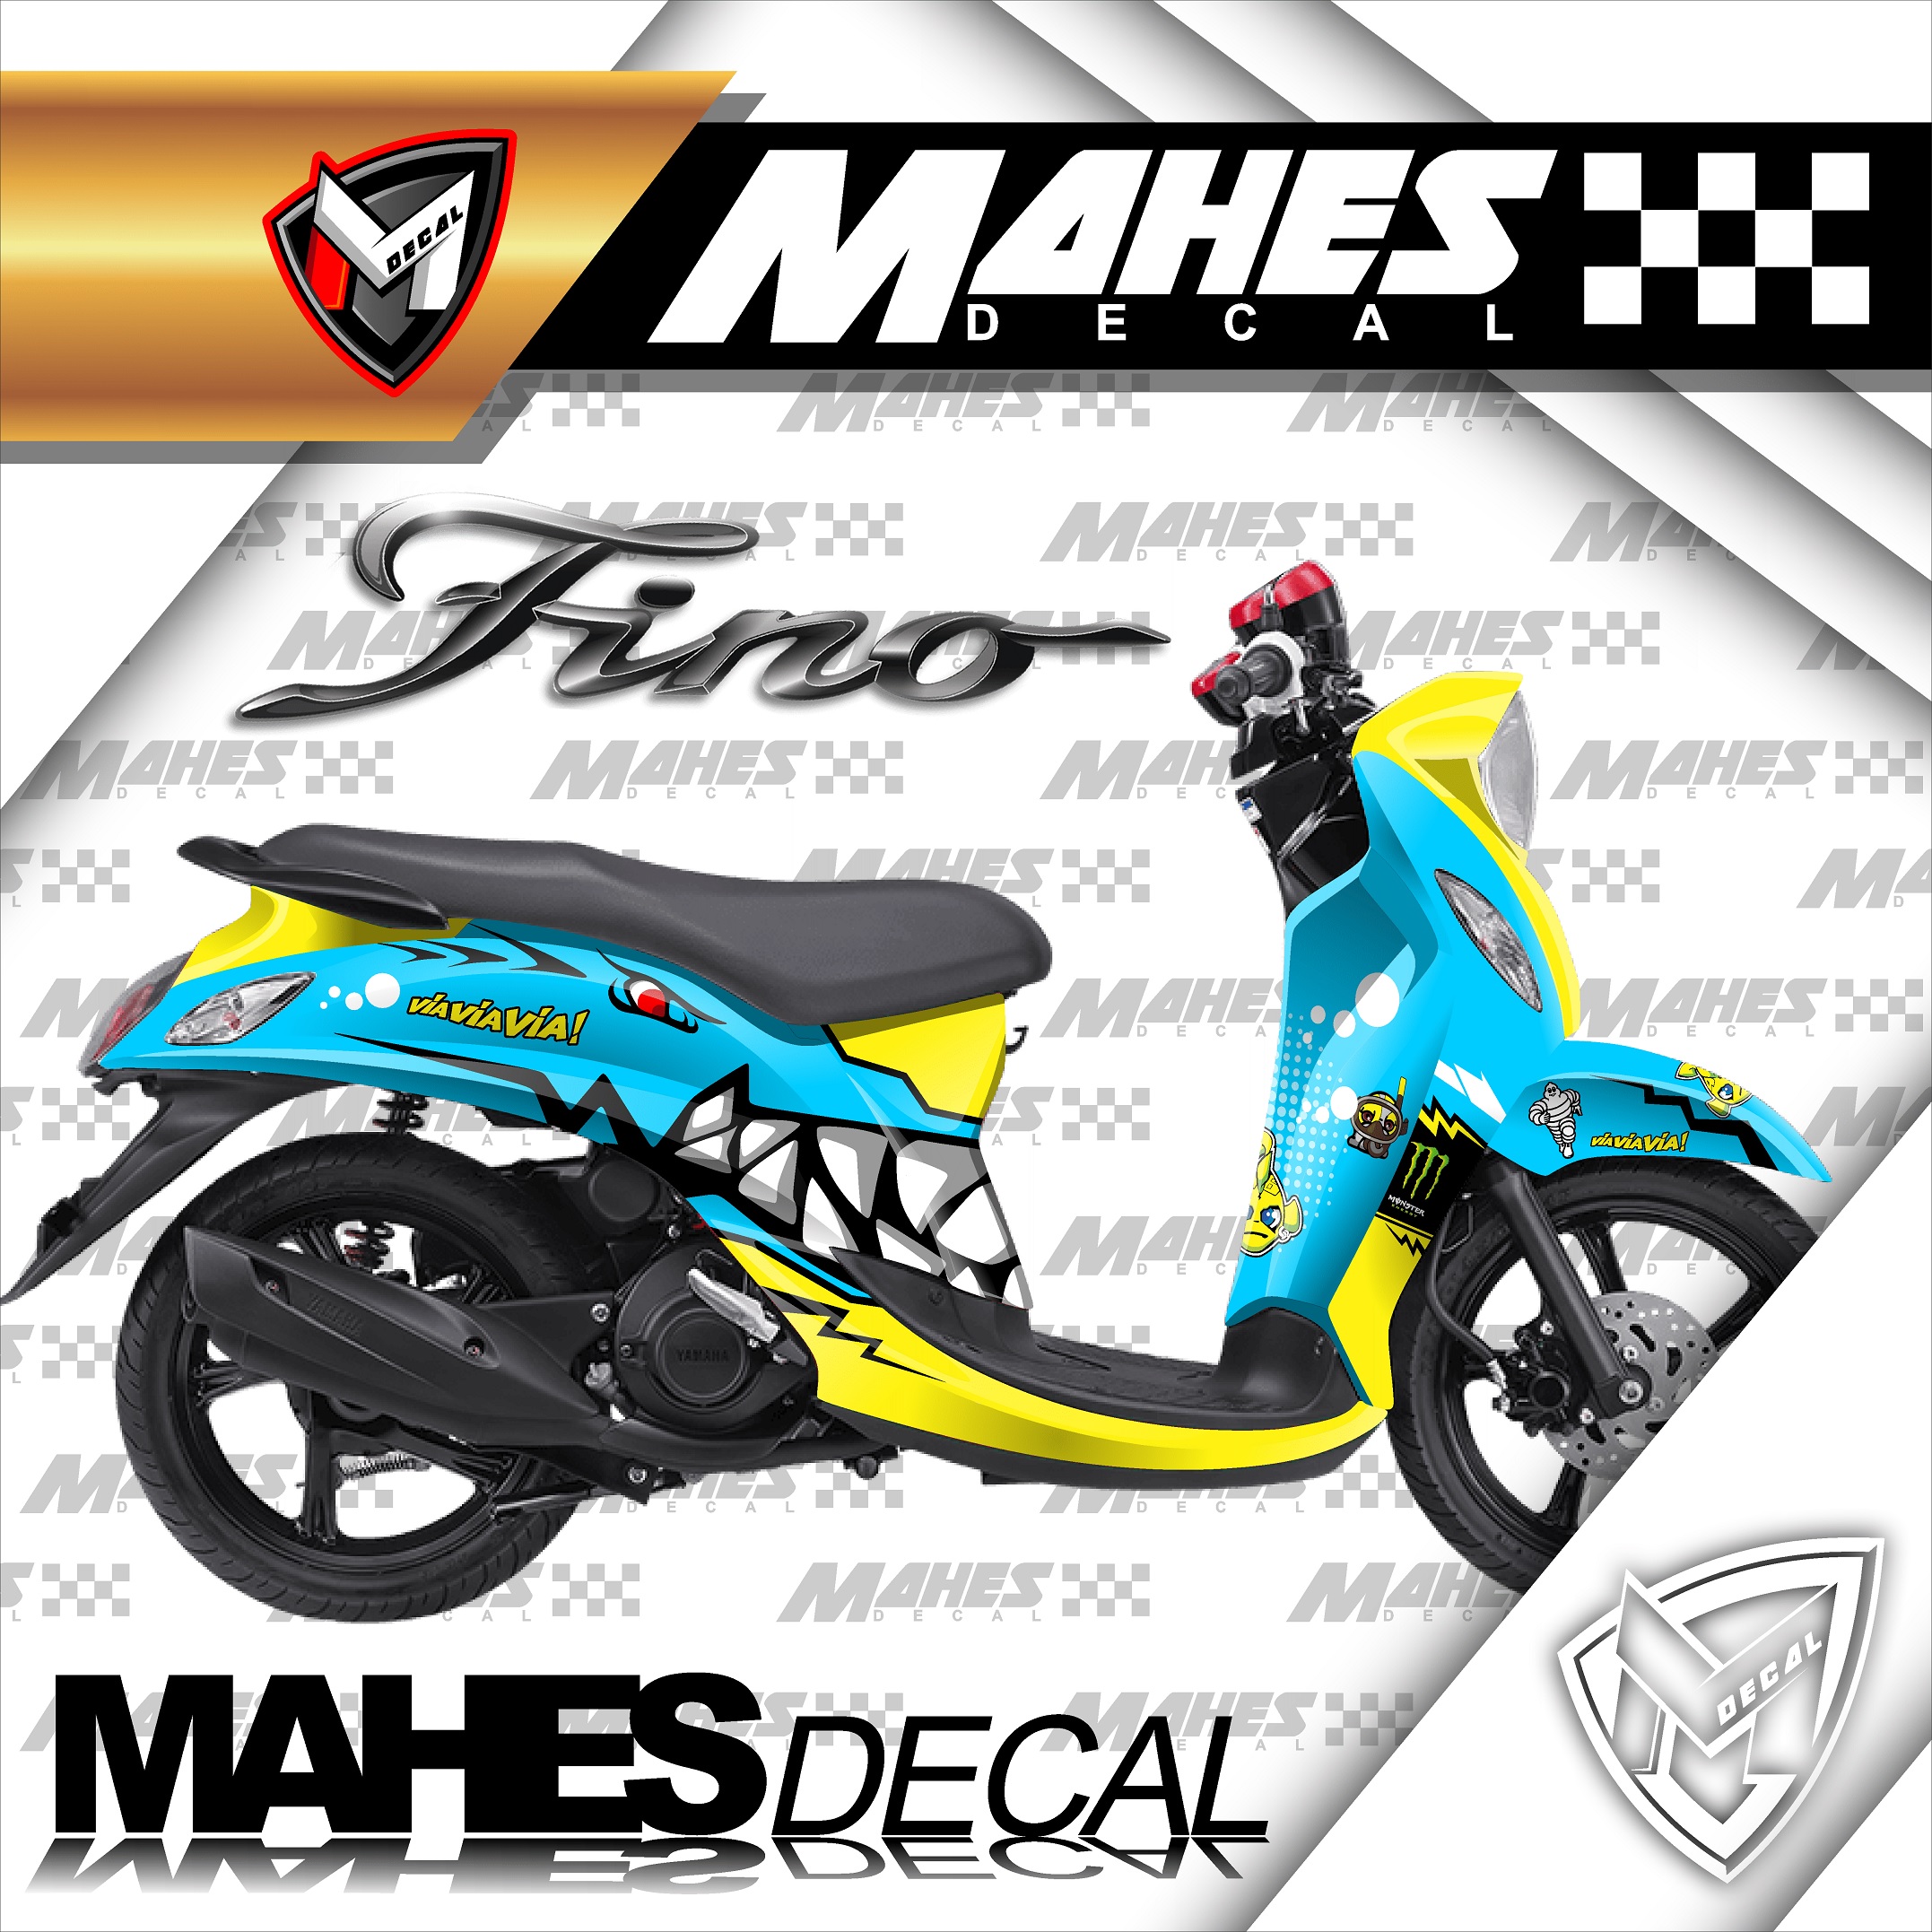 Jual Decal Yamaha Fino 125 Terlengkap Lazada